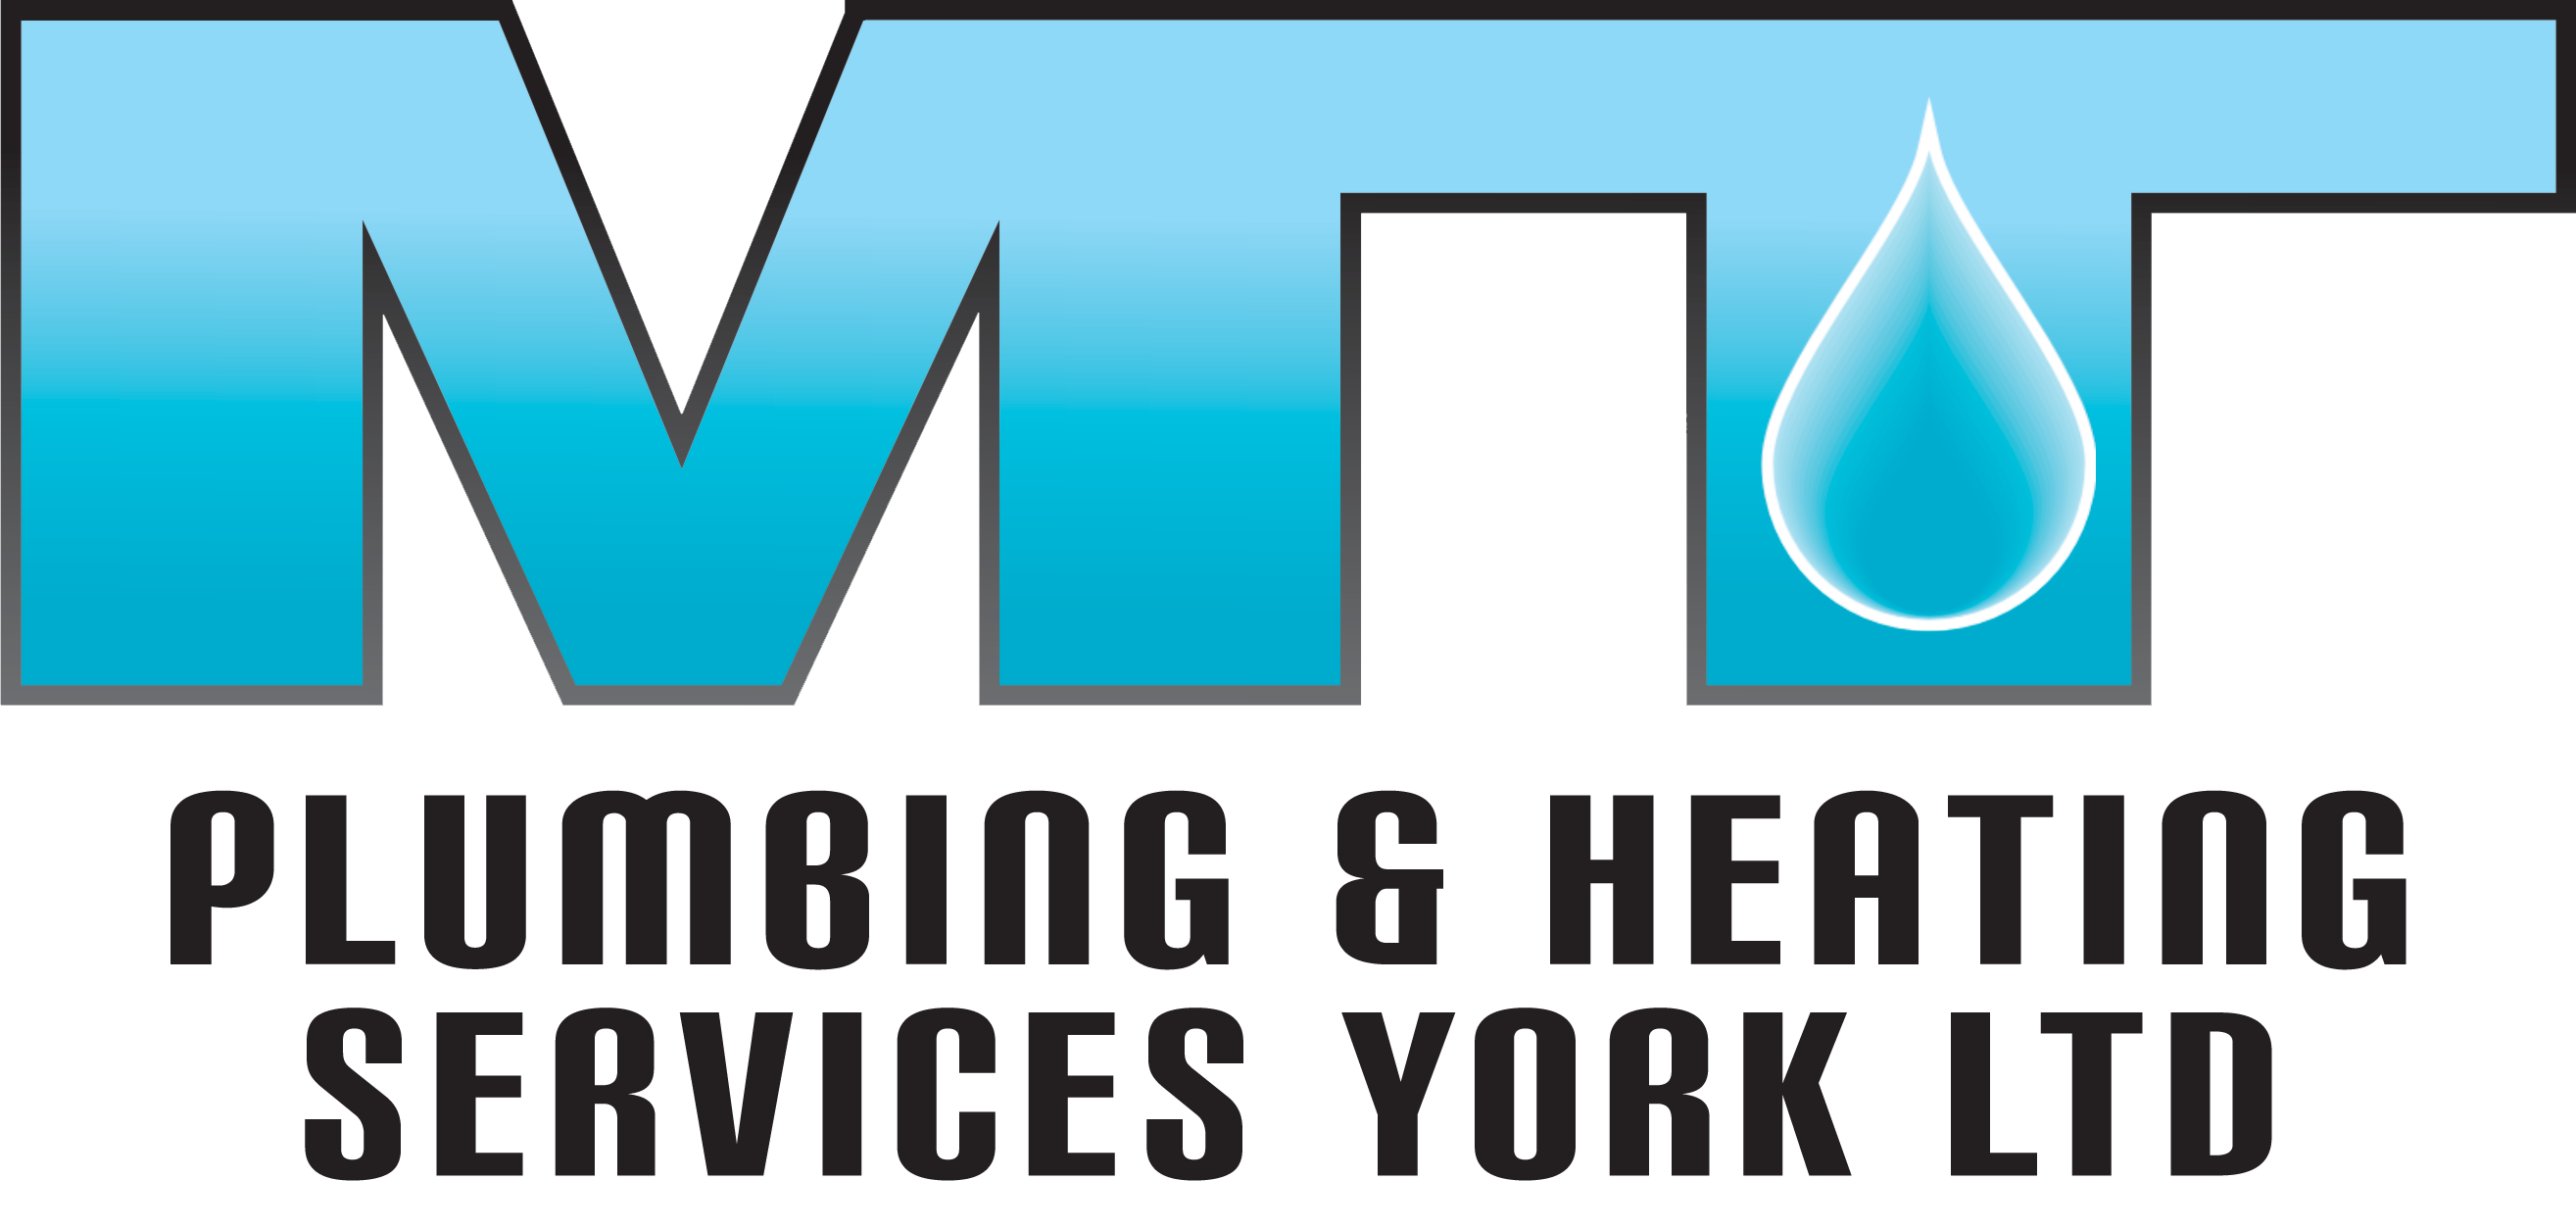 MT Plumbing & Heating Services York Ltd